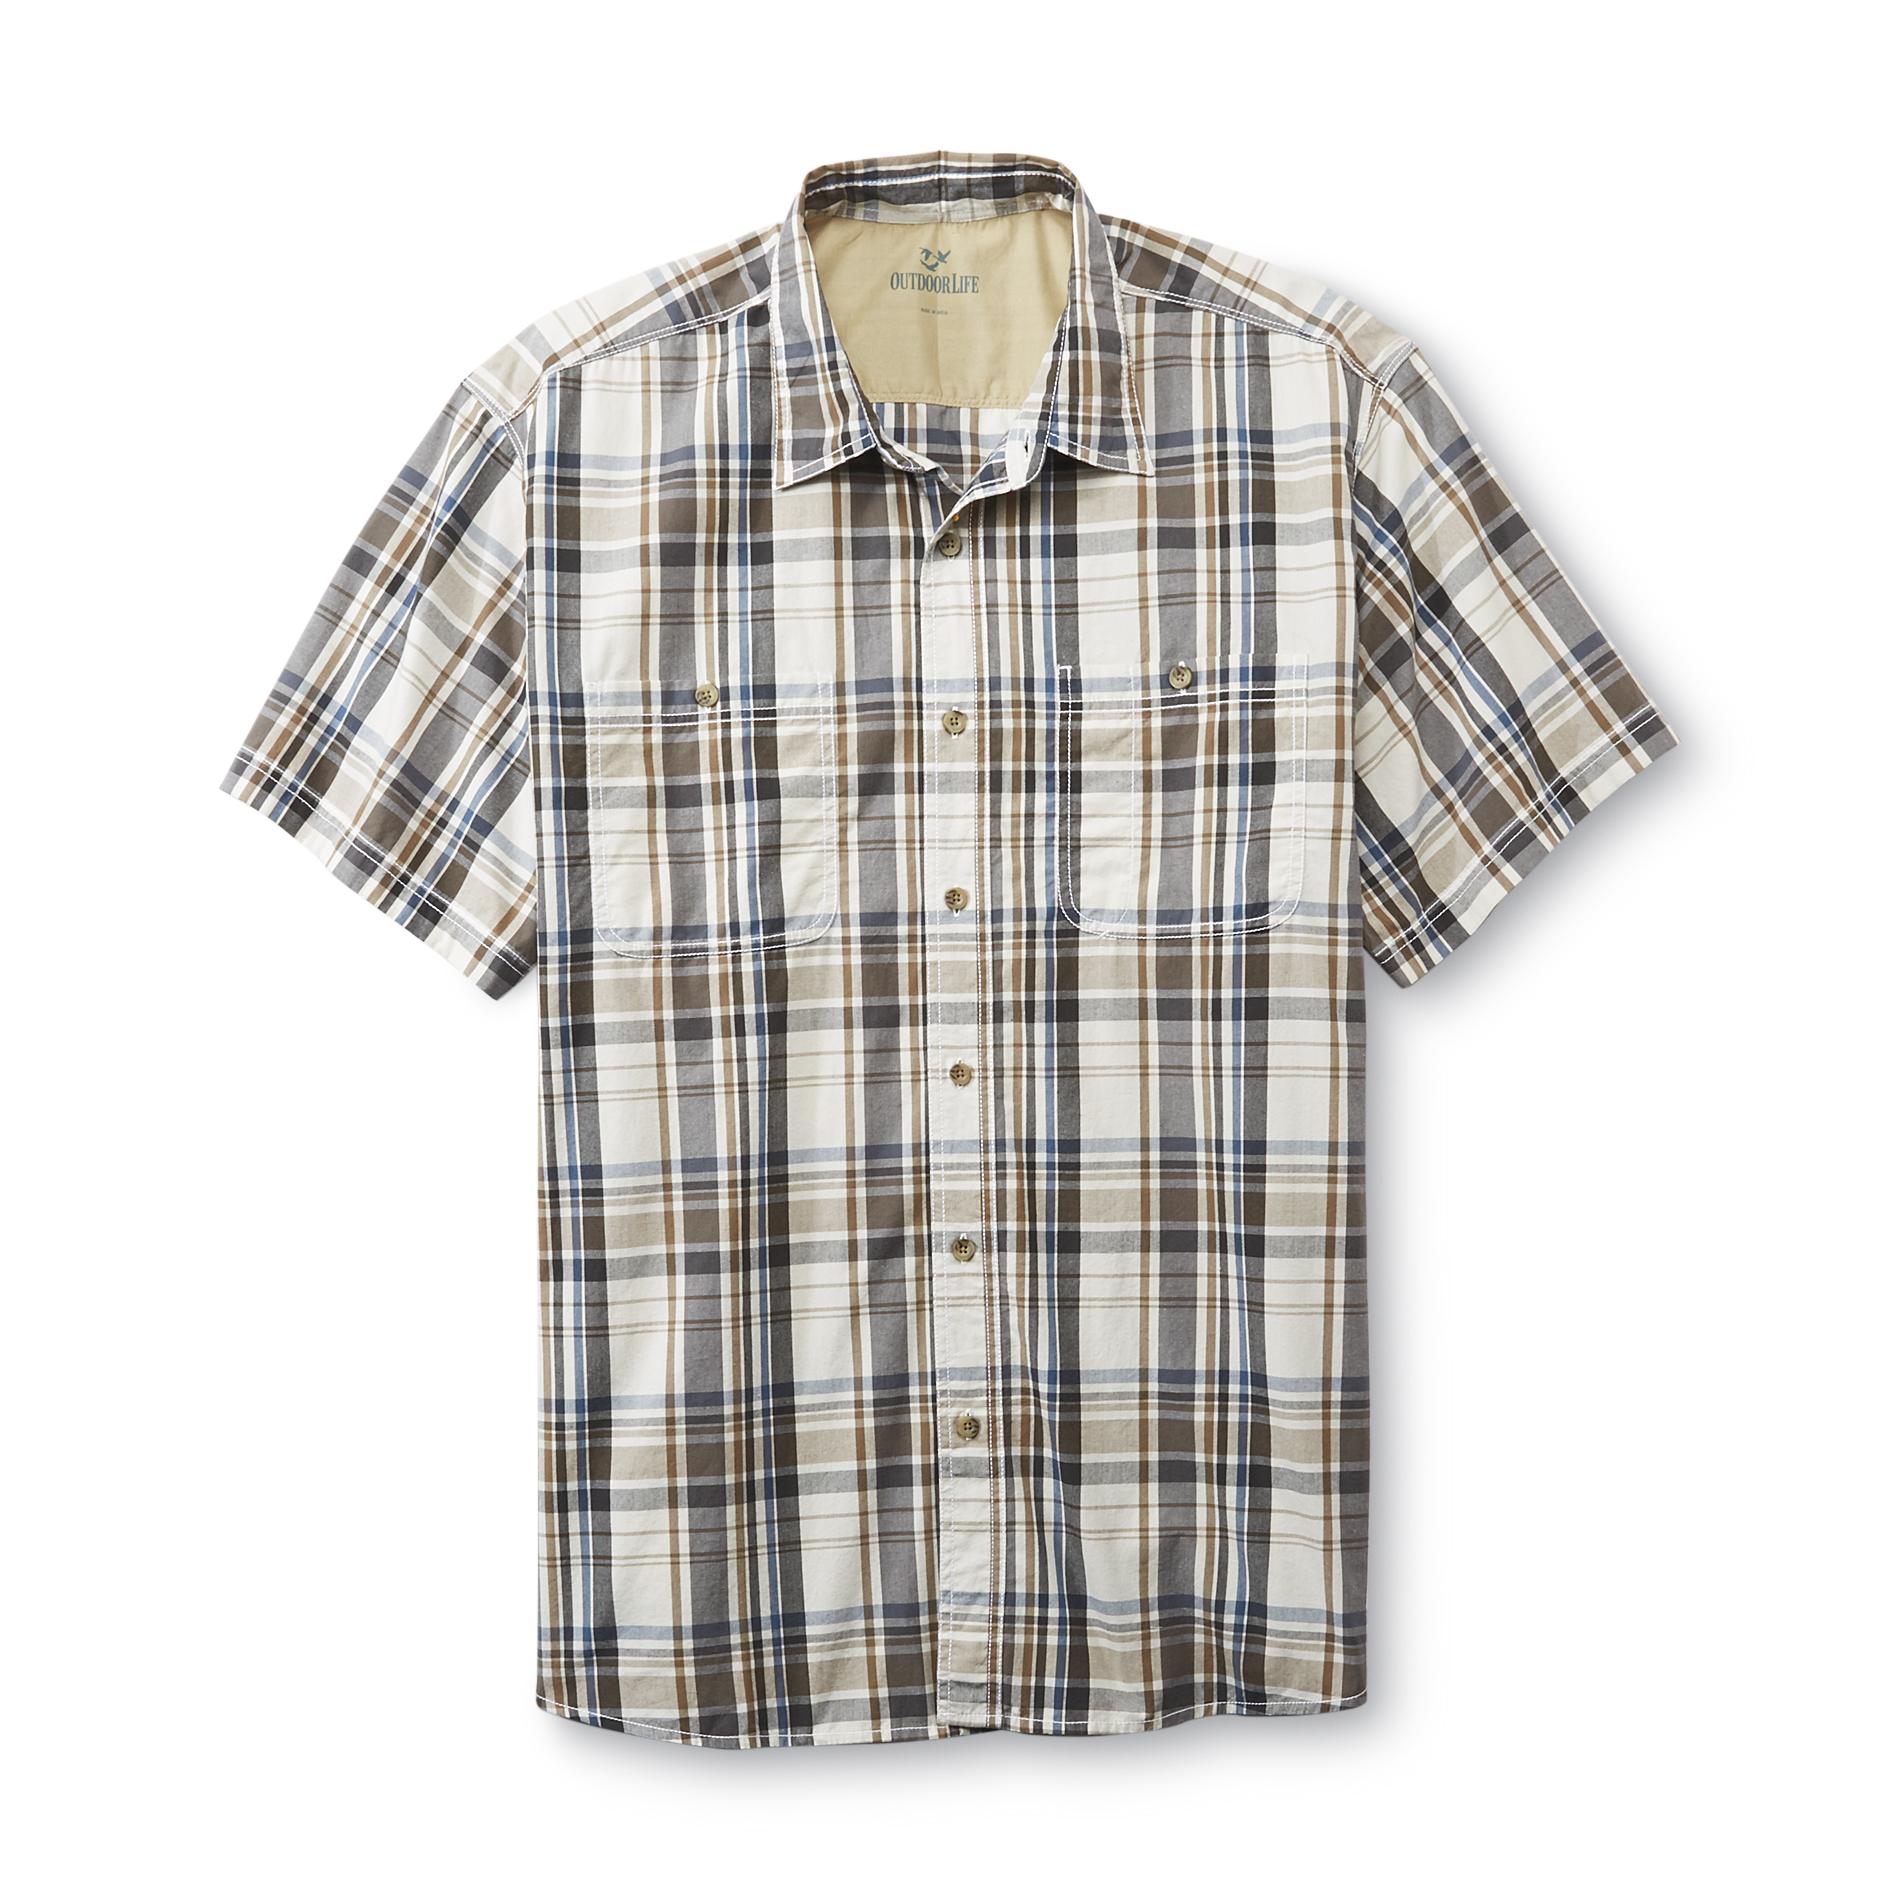 Outdoor Life Men's Big & Tall Discovery Short-Sleeve Shirt - Plaid